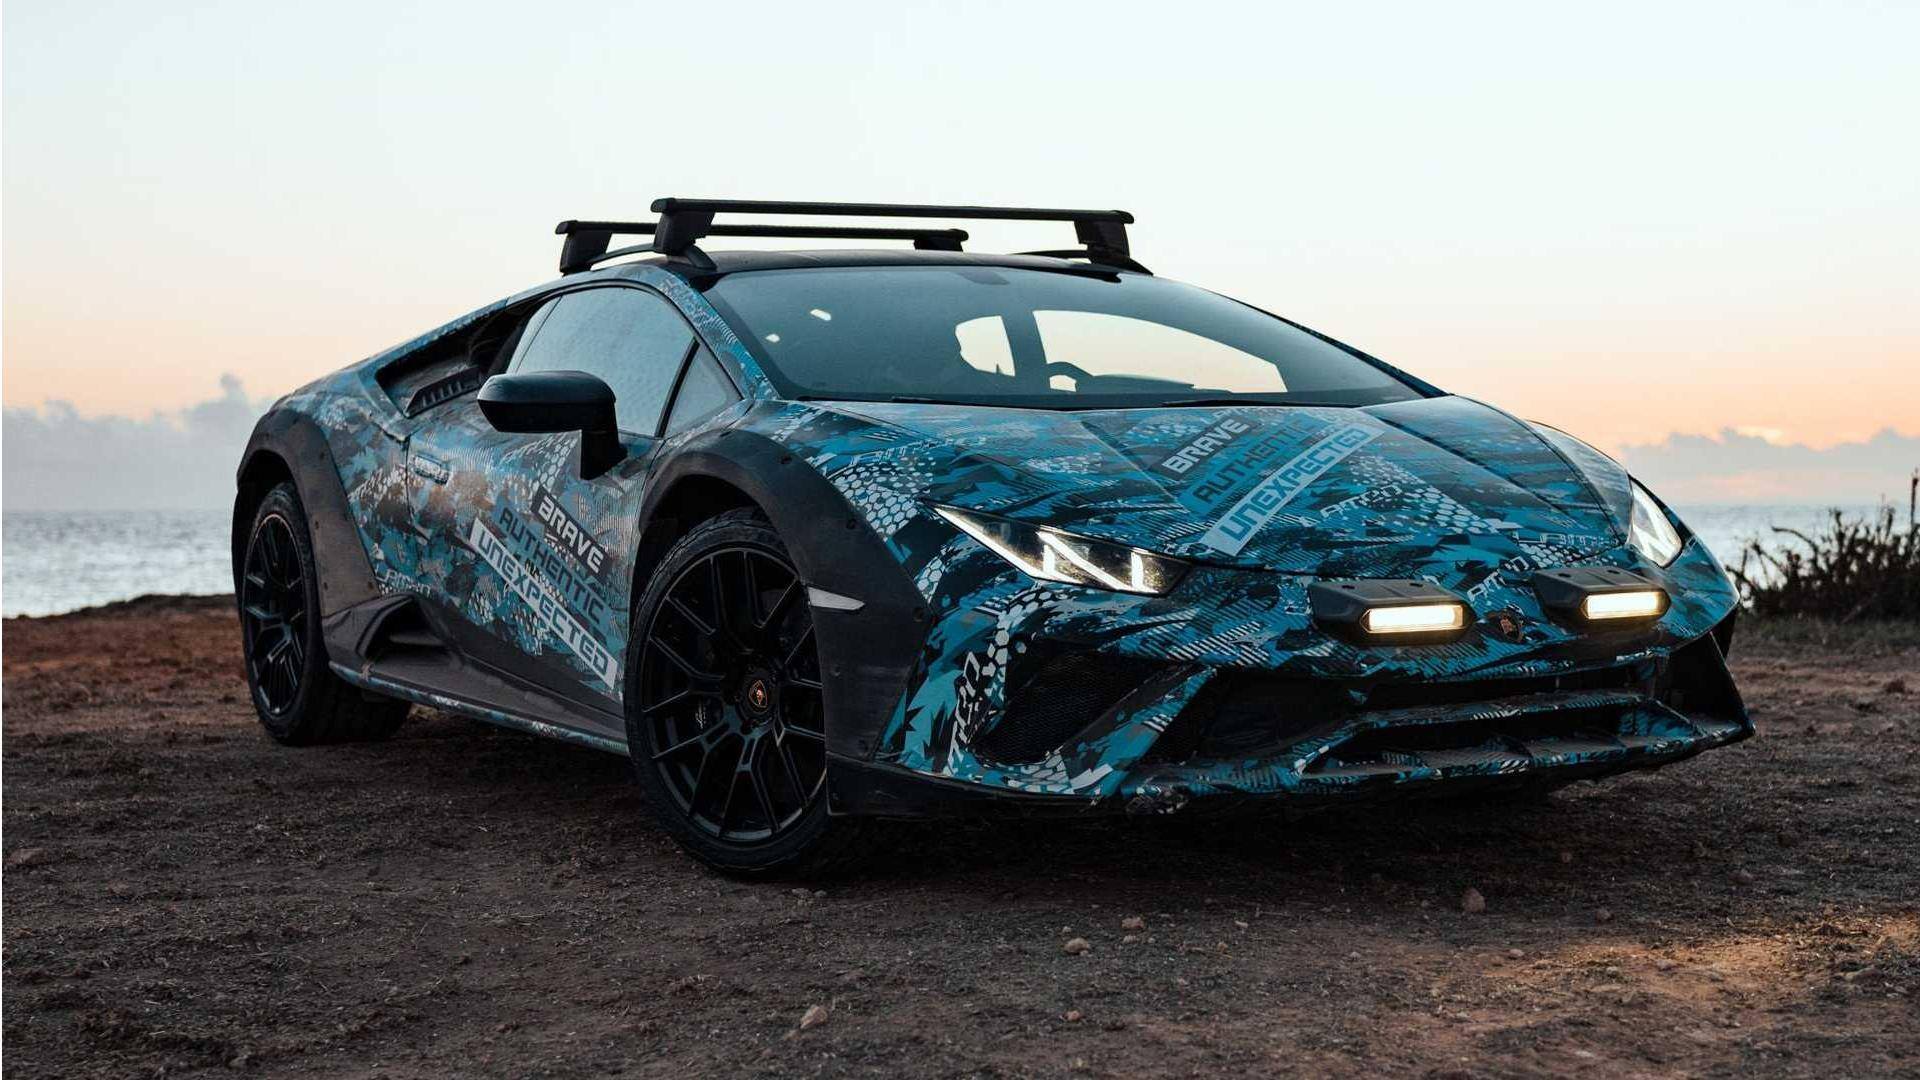 Off-road-biased Lamborghini Huracan Sterrato to break cover in December